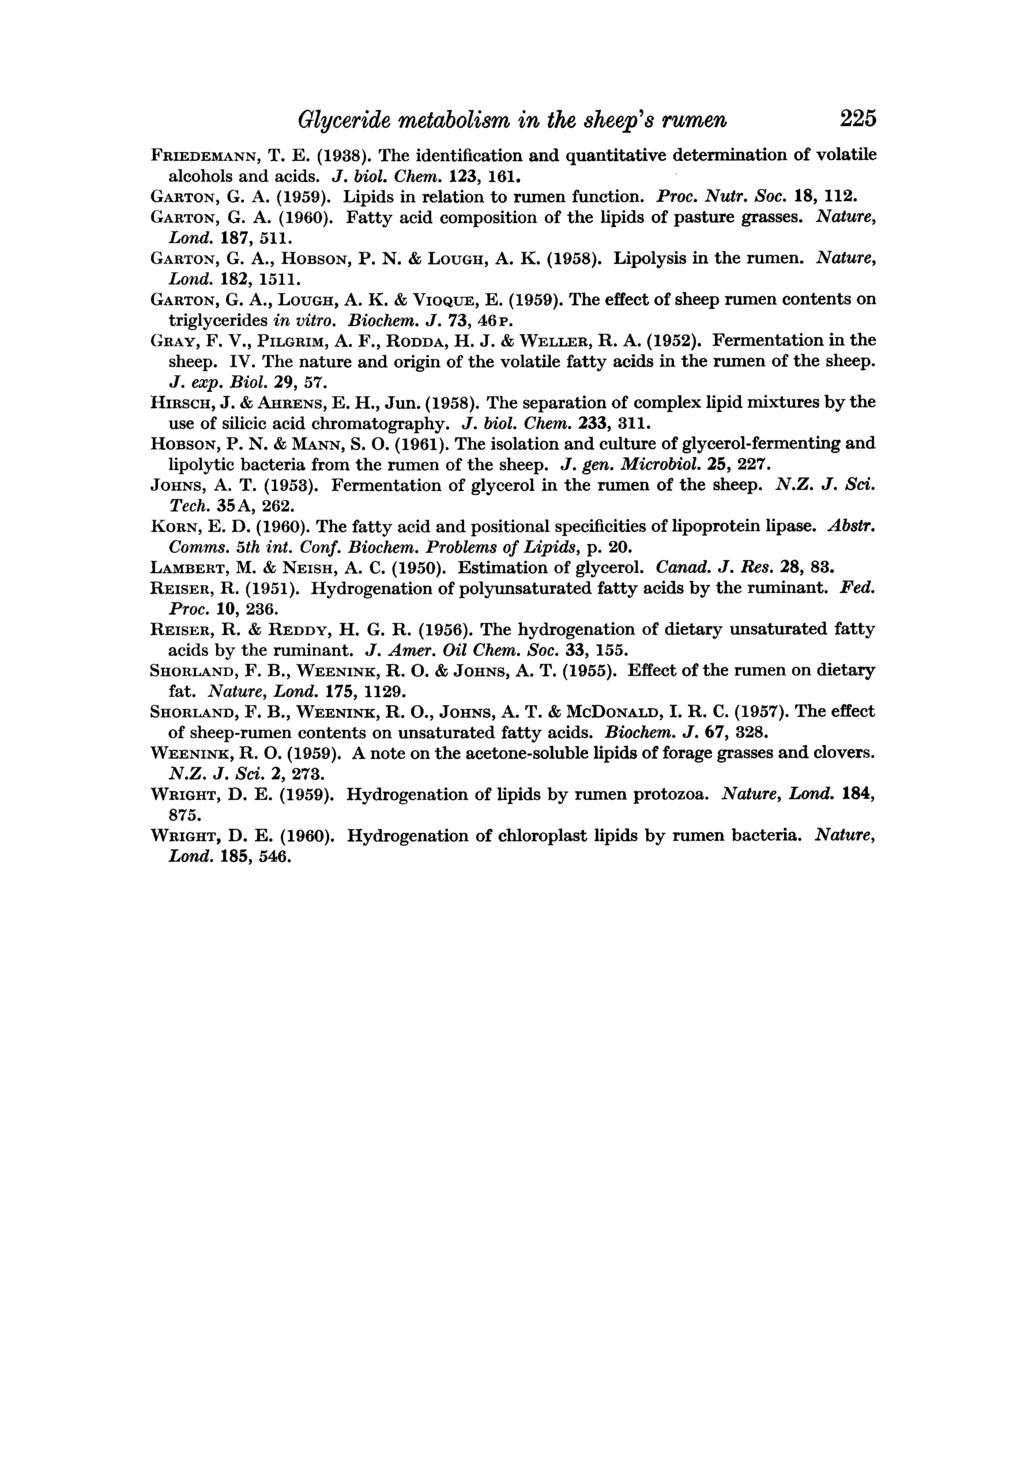 Glyceride metabolism in the sheep s rumen 225 FRIEDEMANN, T. E. (1938). The identification and quantitative determination of volatile alcohols and acids. J. biol. Chem. 123, 161. GARTON, G. A. (1959).